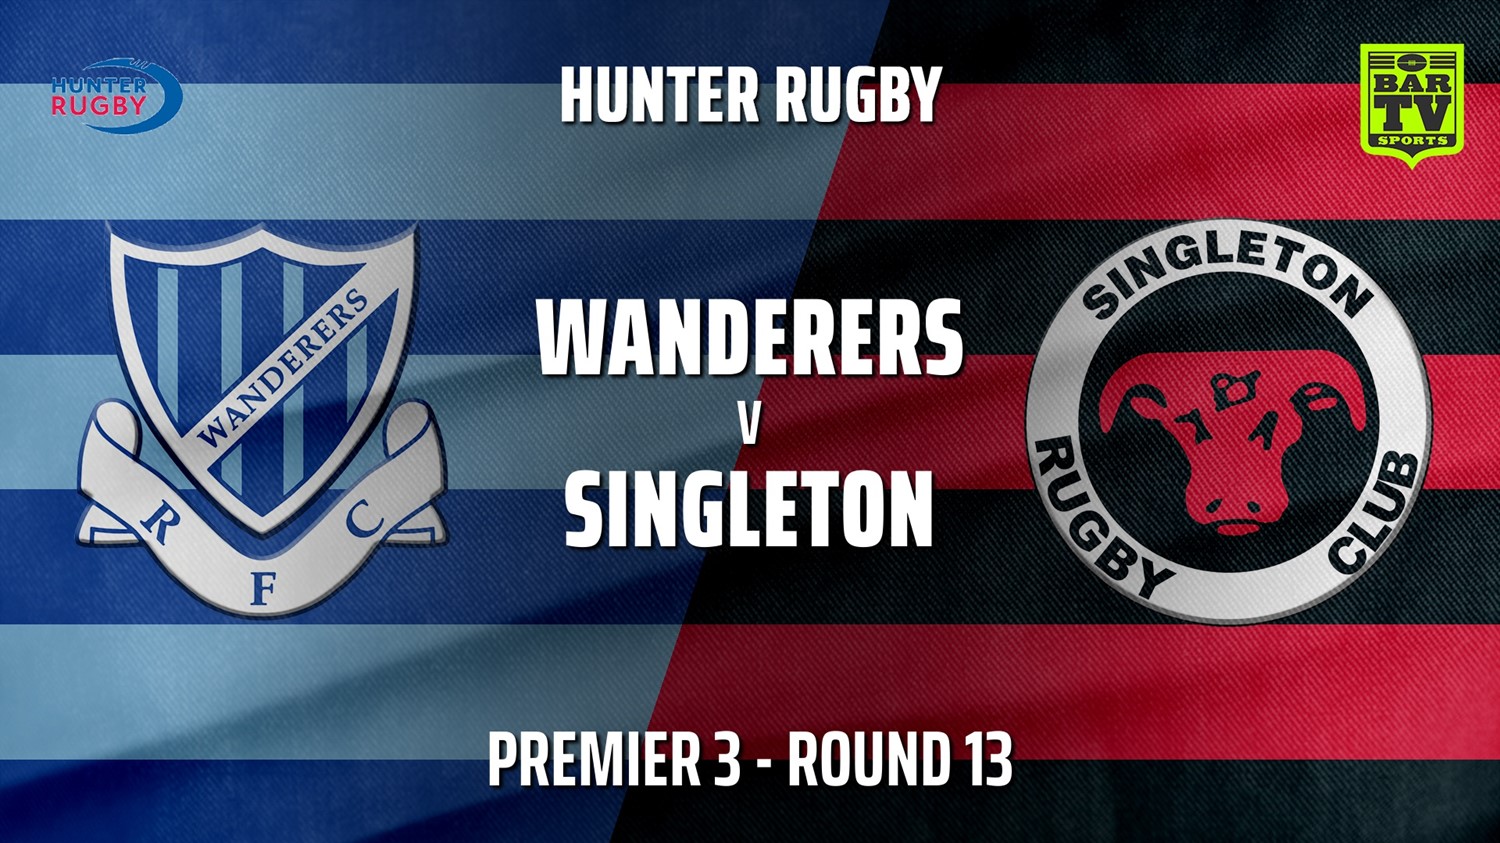 210717-Hunter Rugby Round 13 - Premier 3 - Wanderers v Singleton Bulls Slate Image